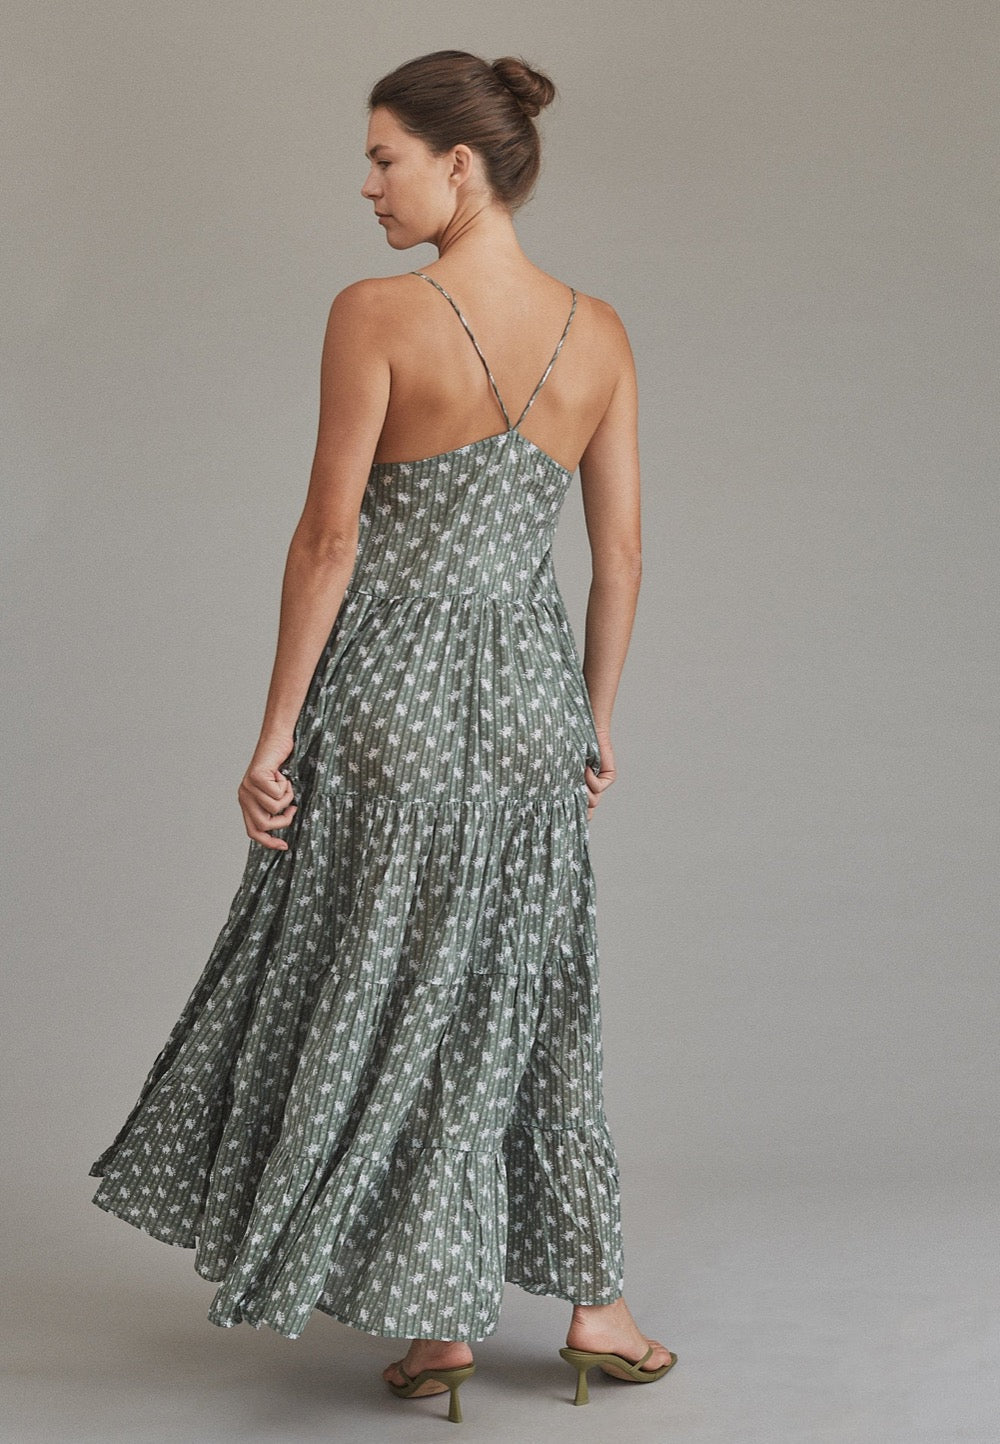 Acacia Swimwear Jade Dress |Punahele